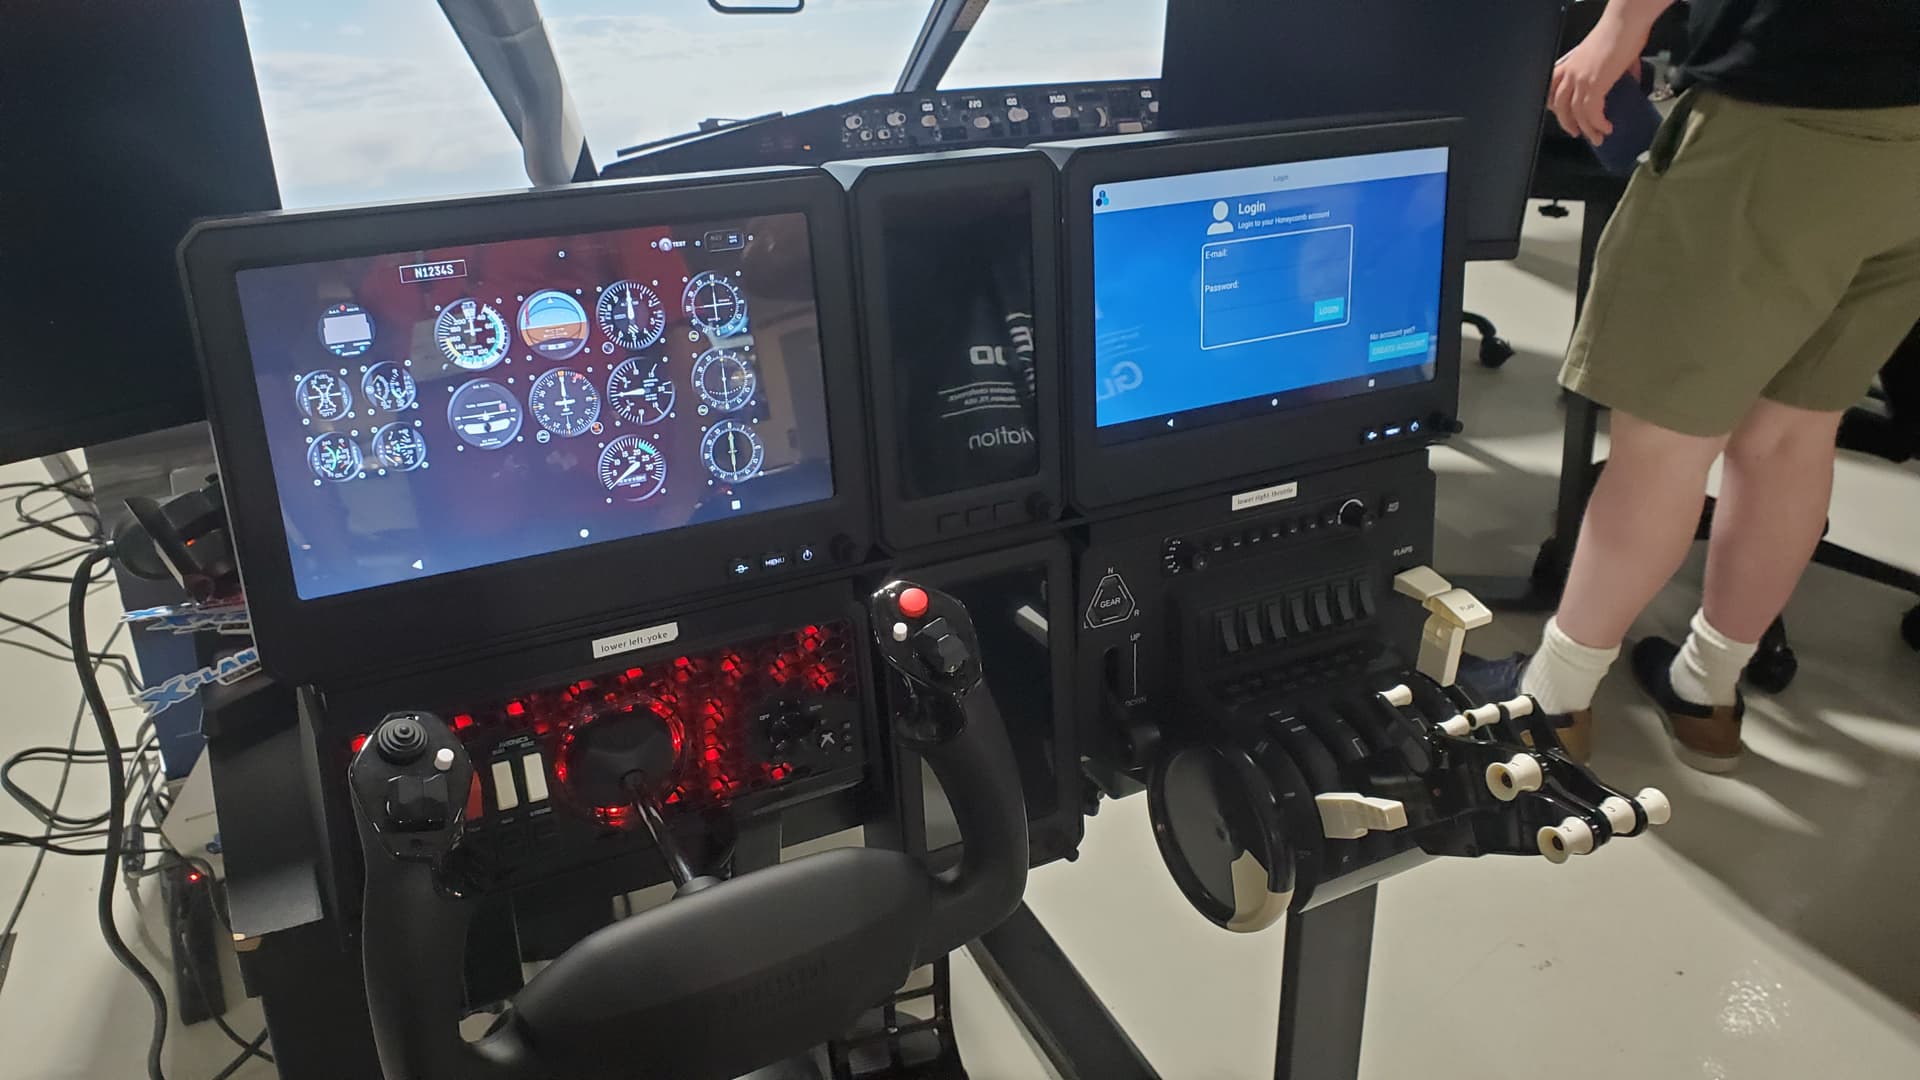 Honeycomb Aeronautical Charlie rudder pedals - Hardware & Peripherals -  Microsoft Flight Simulator Forums